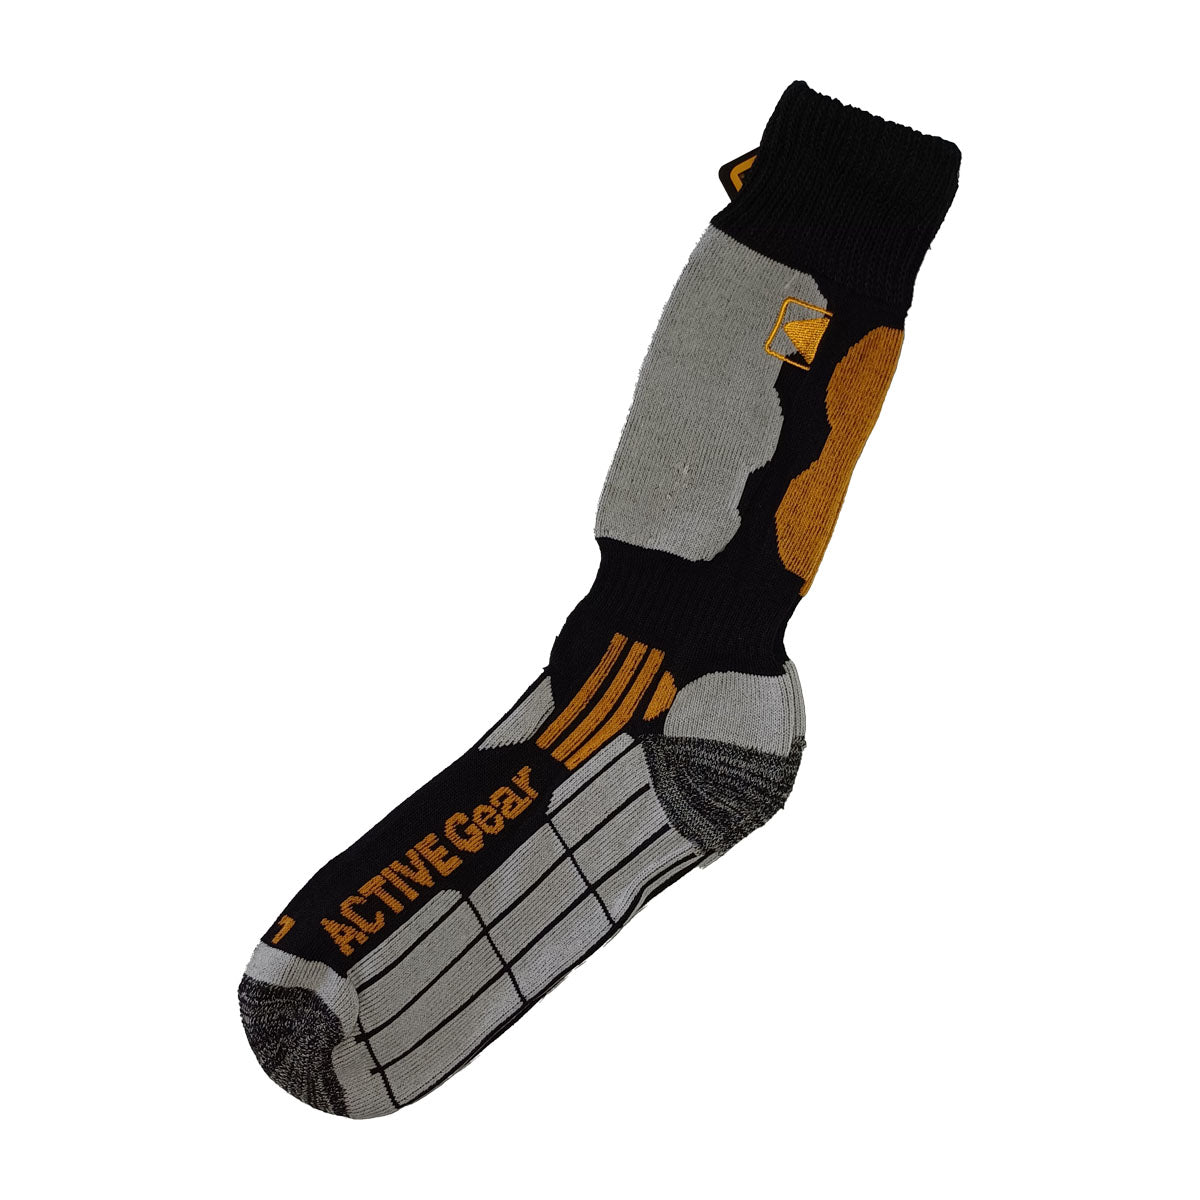 Active Gear socks